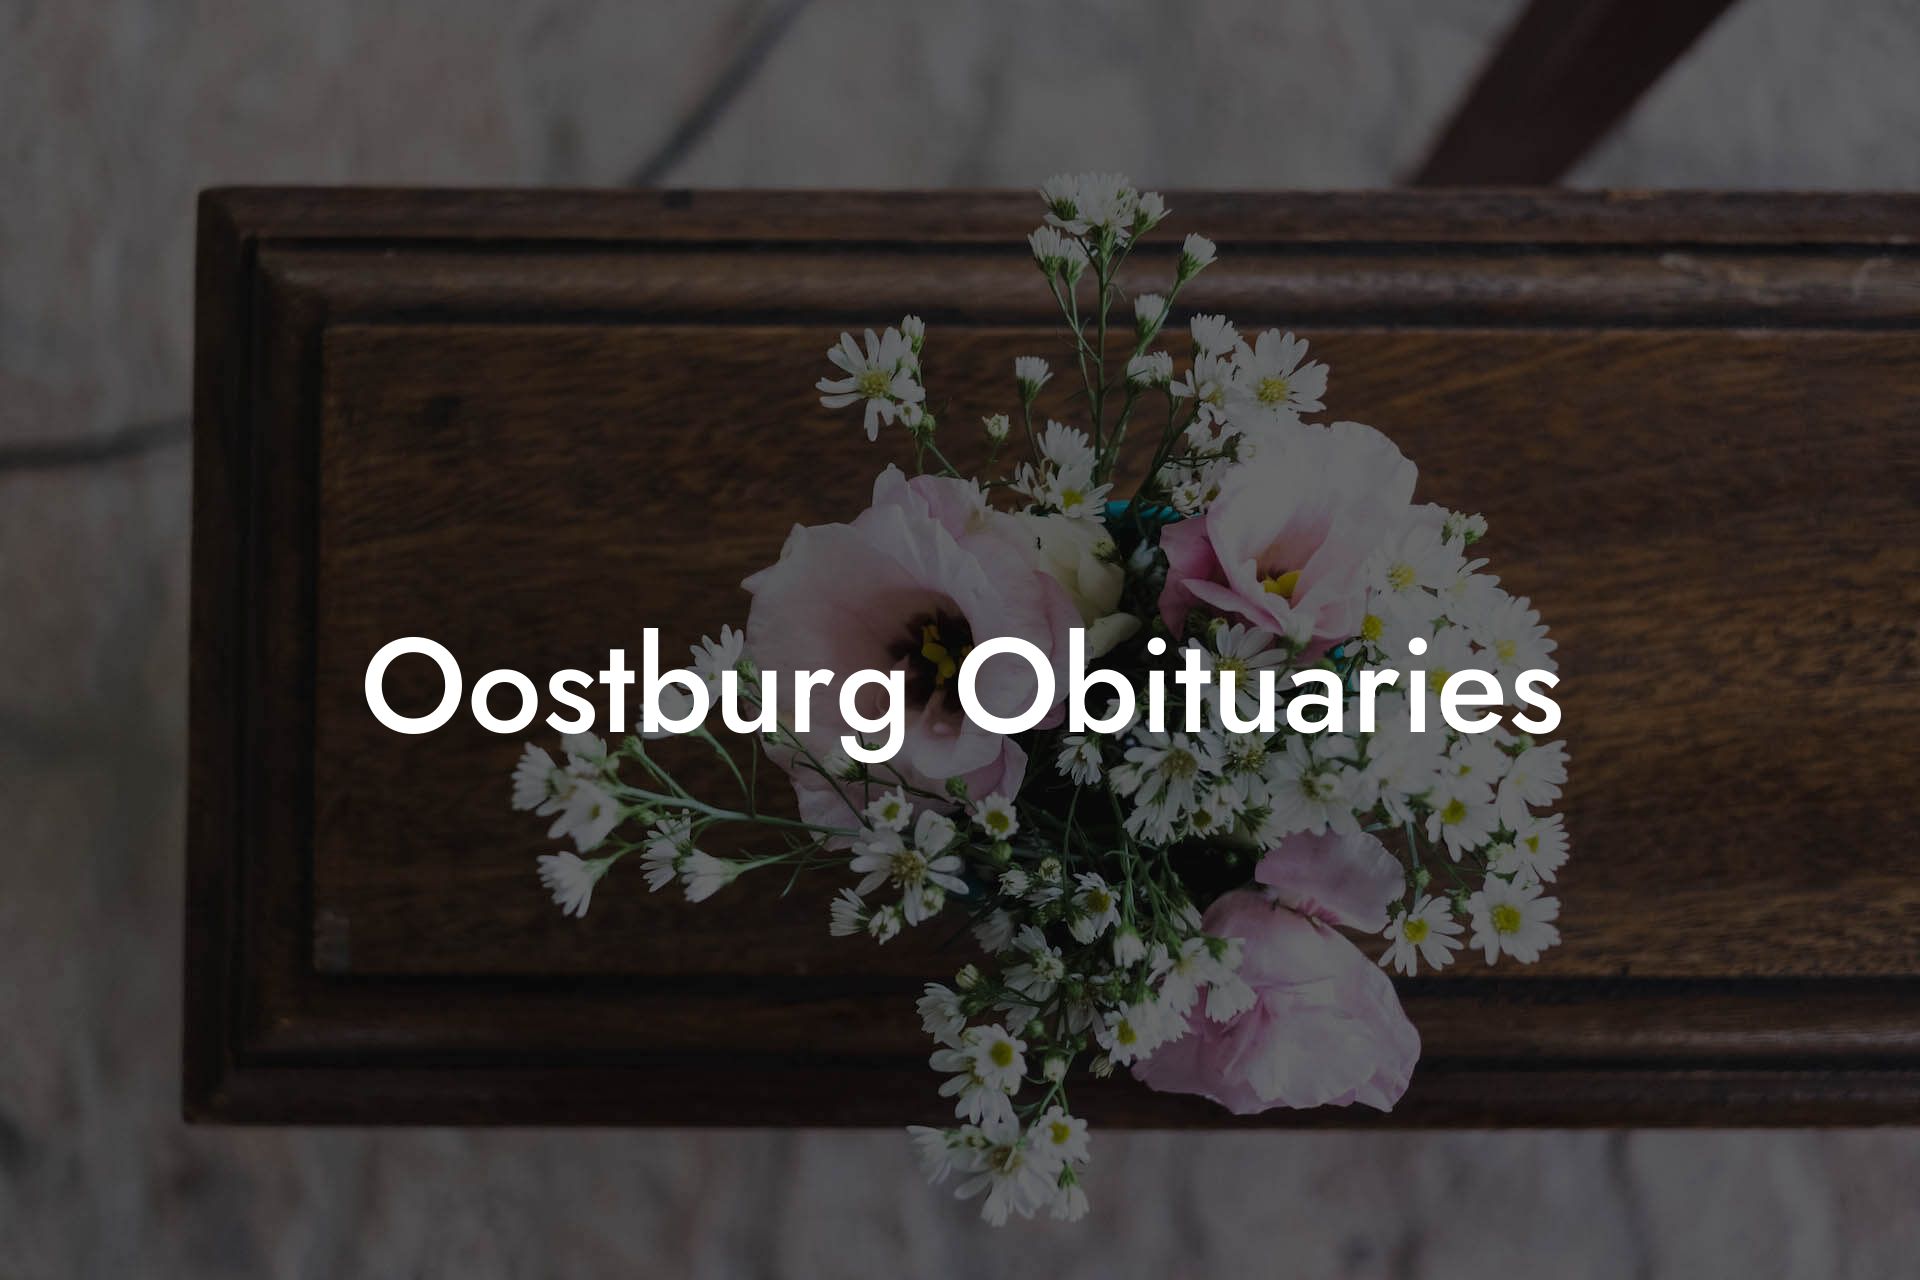 Oostburg Obituaries